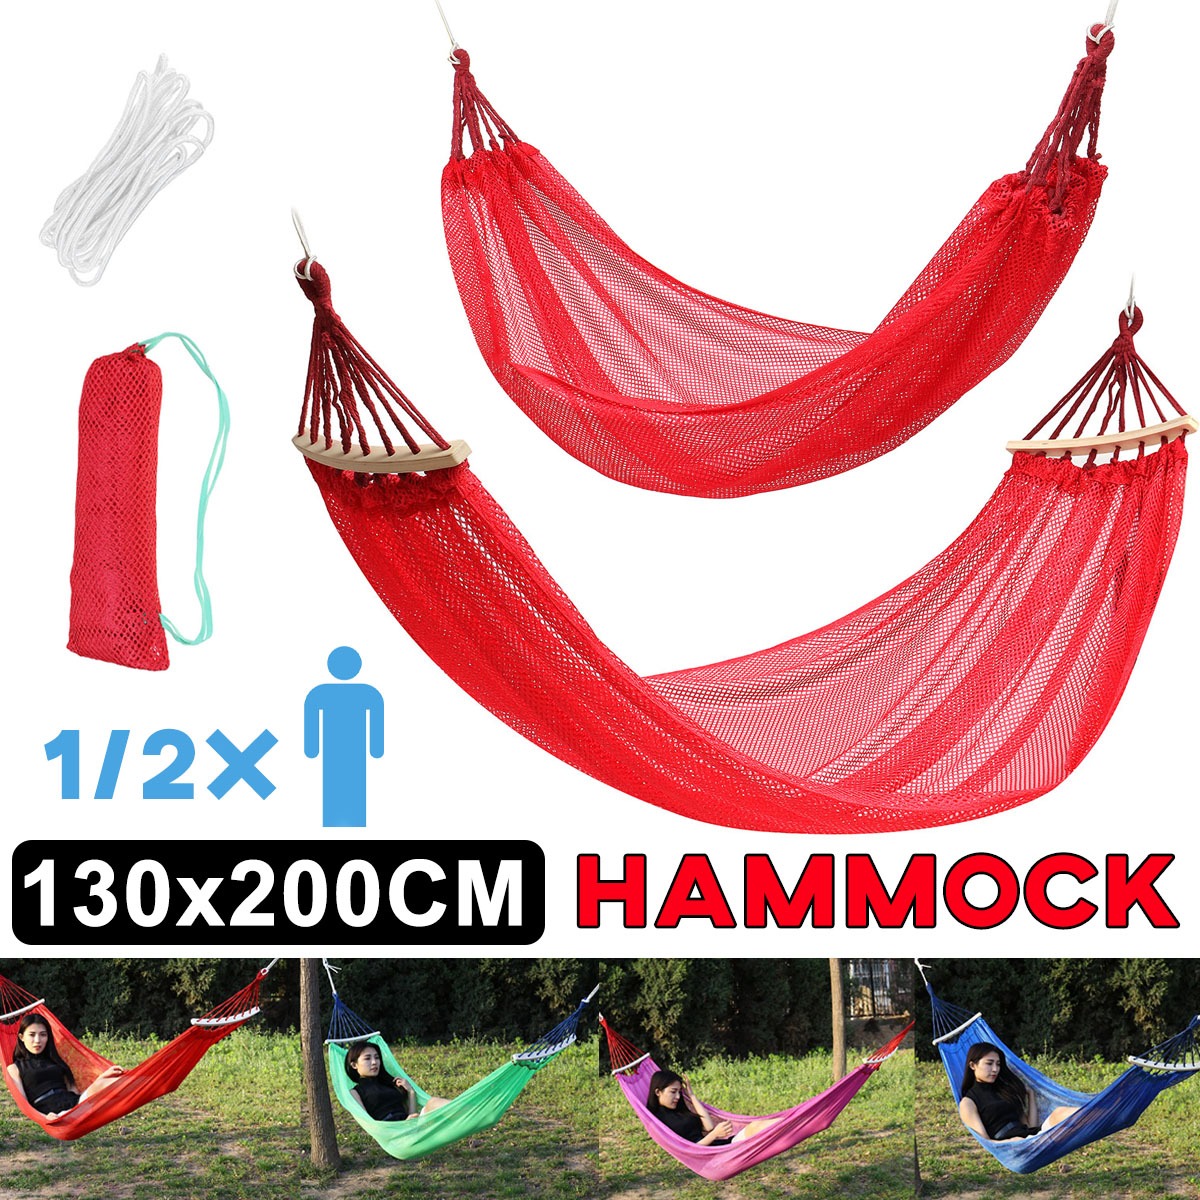 Portable-Hammocks-Single-People-Leisure-Sleeping-Hamaca-Hanging-Bed-Camping-Travel-1872332-1